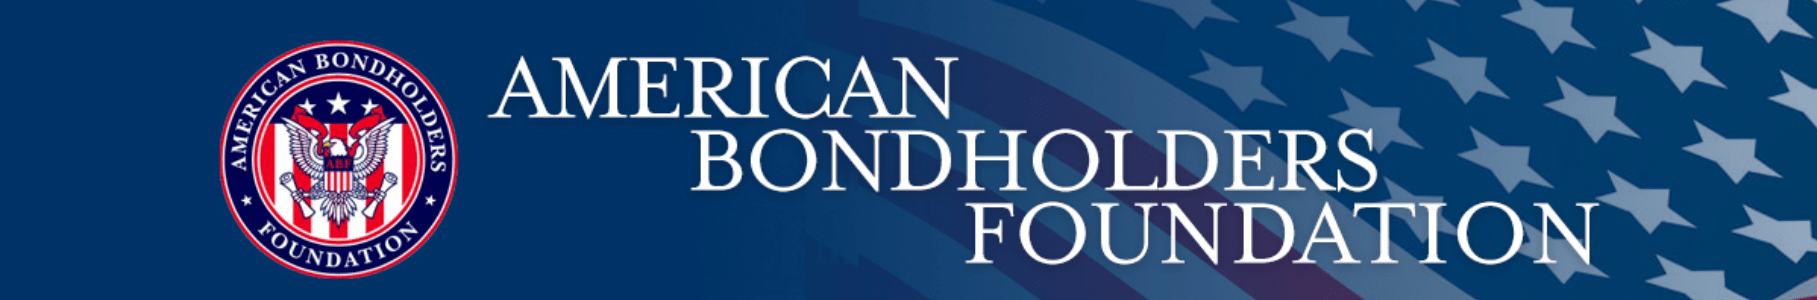 American Bondholders Foundation, LLC